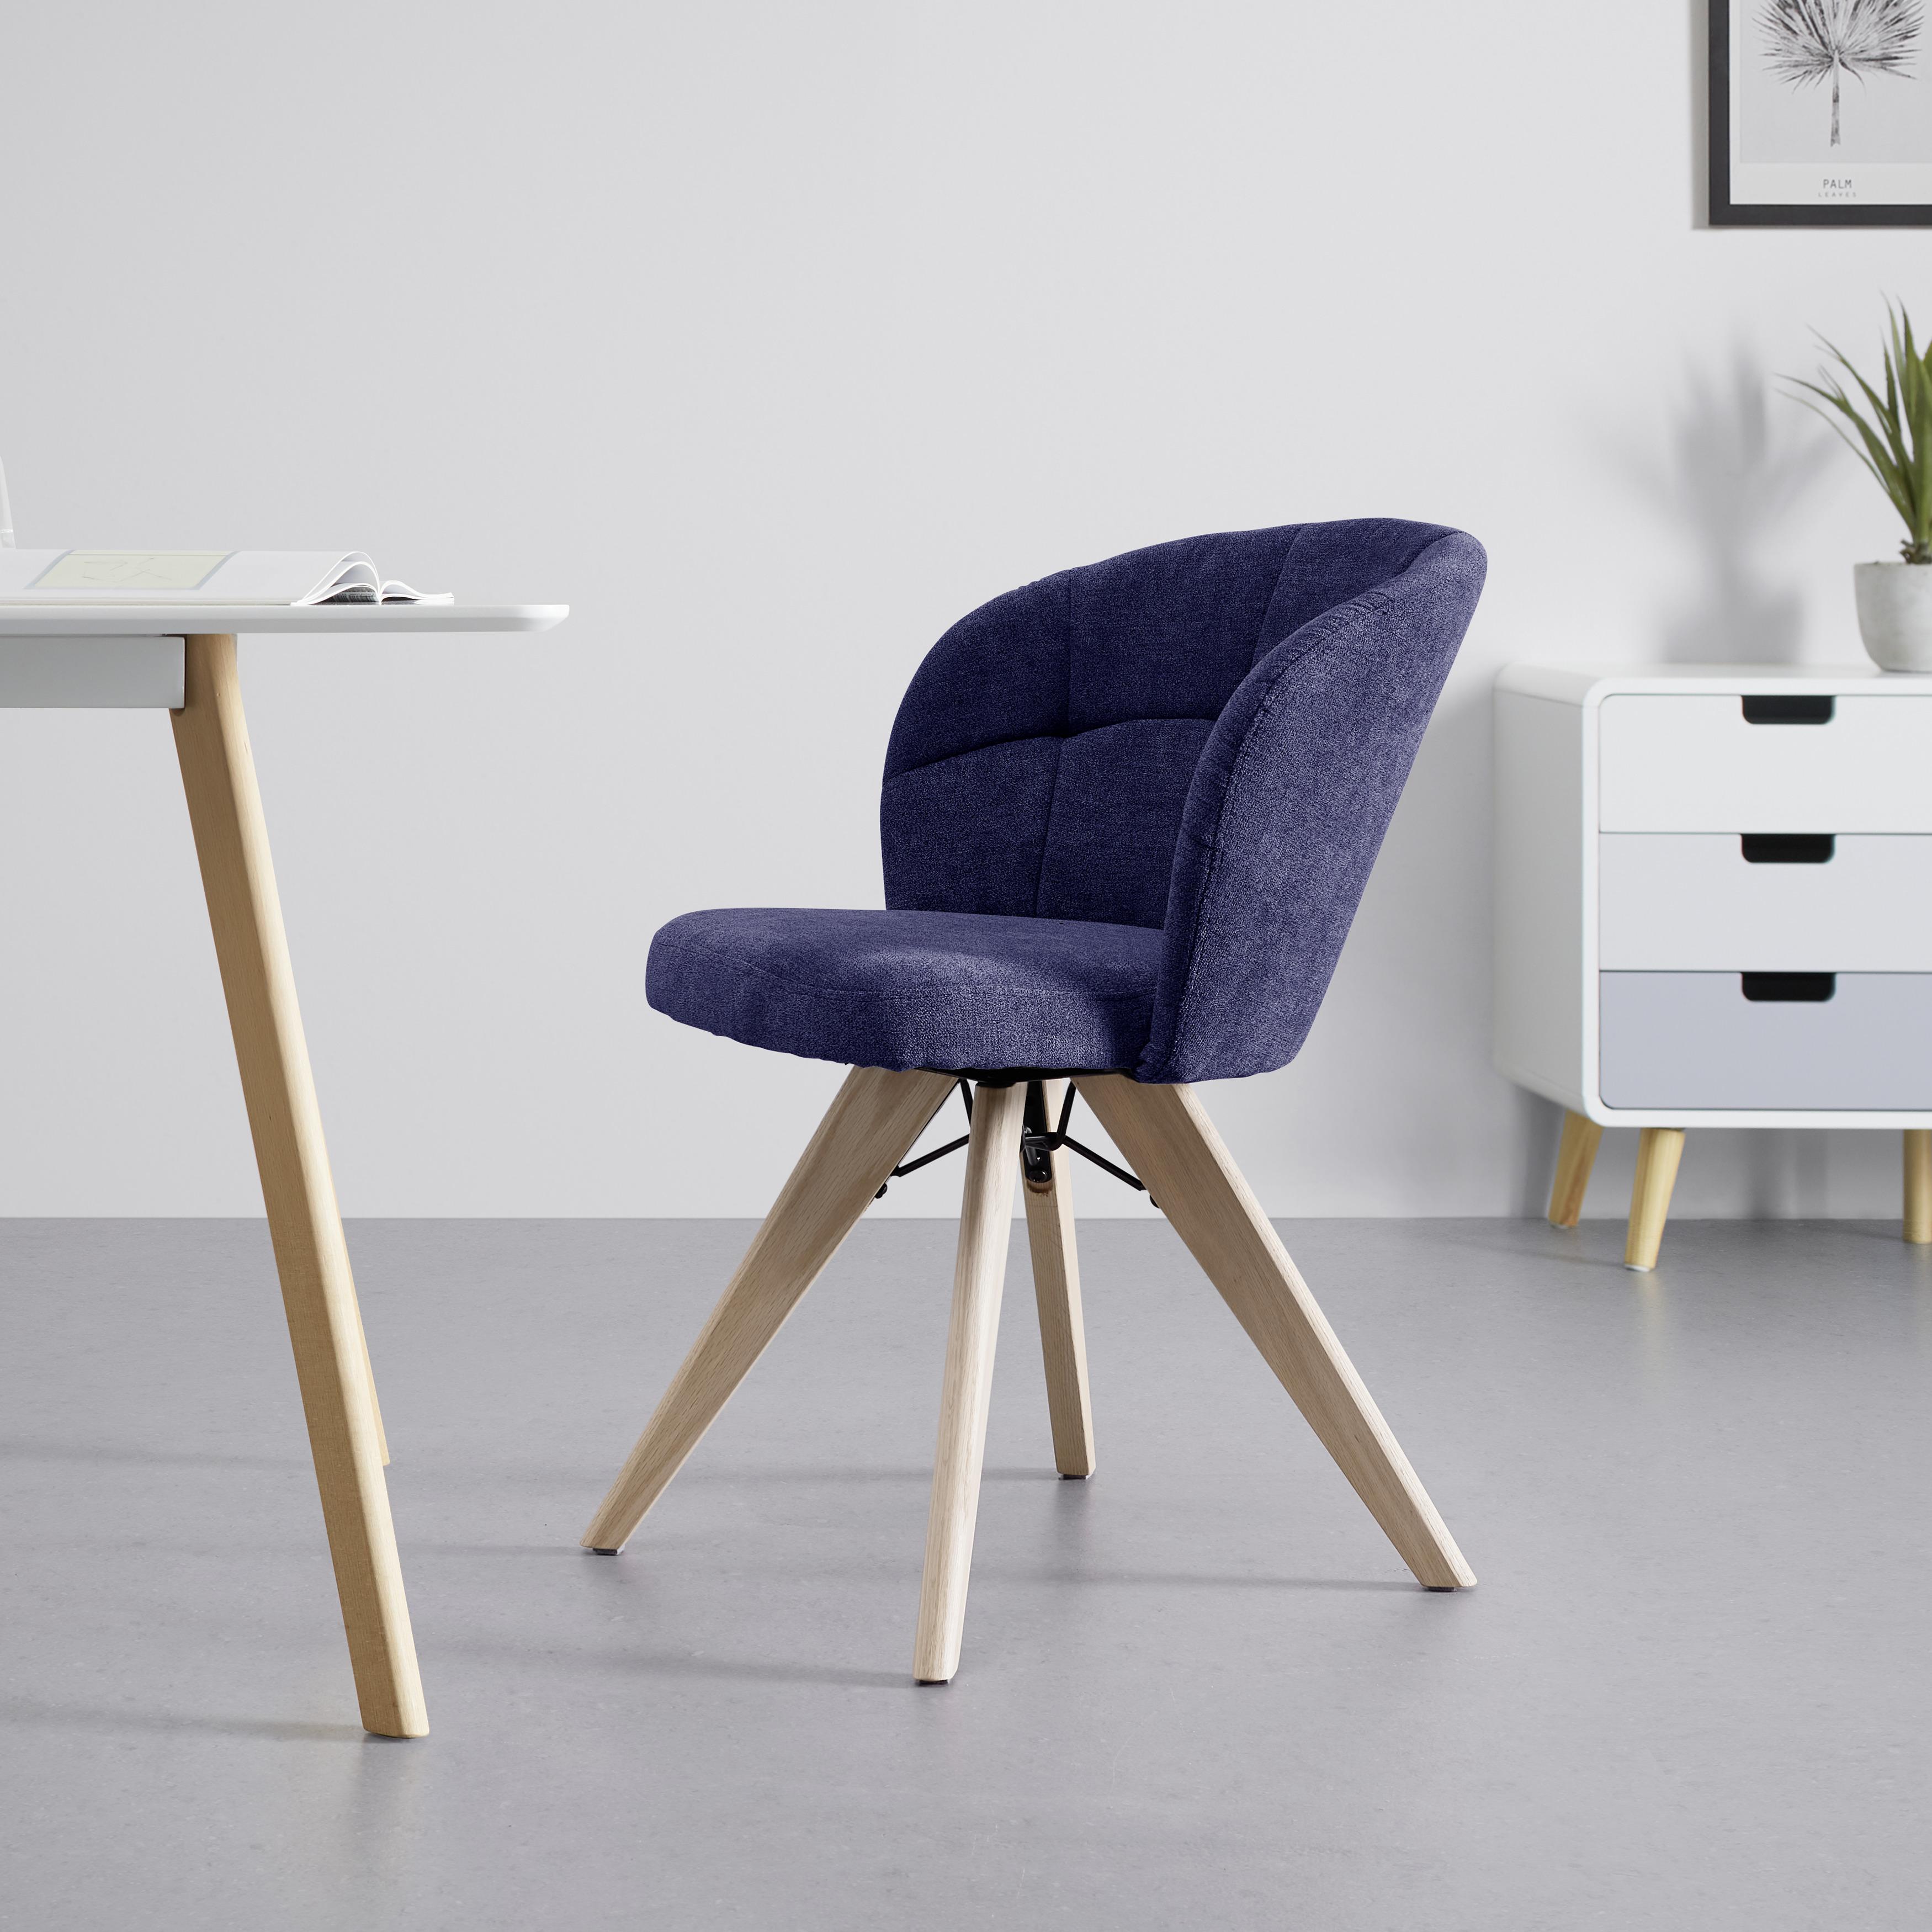 Stuhl "Maxy", Webstoff, drehbar, blau, Echtholz Beine - Blau, MODERN, Holz/Textil (56/79,5/59,5cm) - Bessagi Home